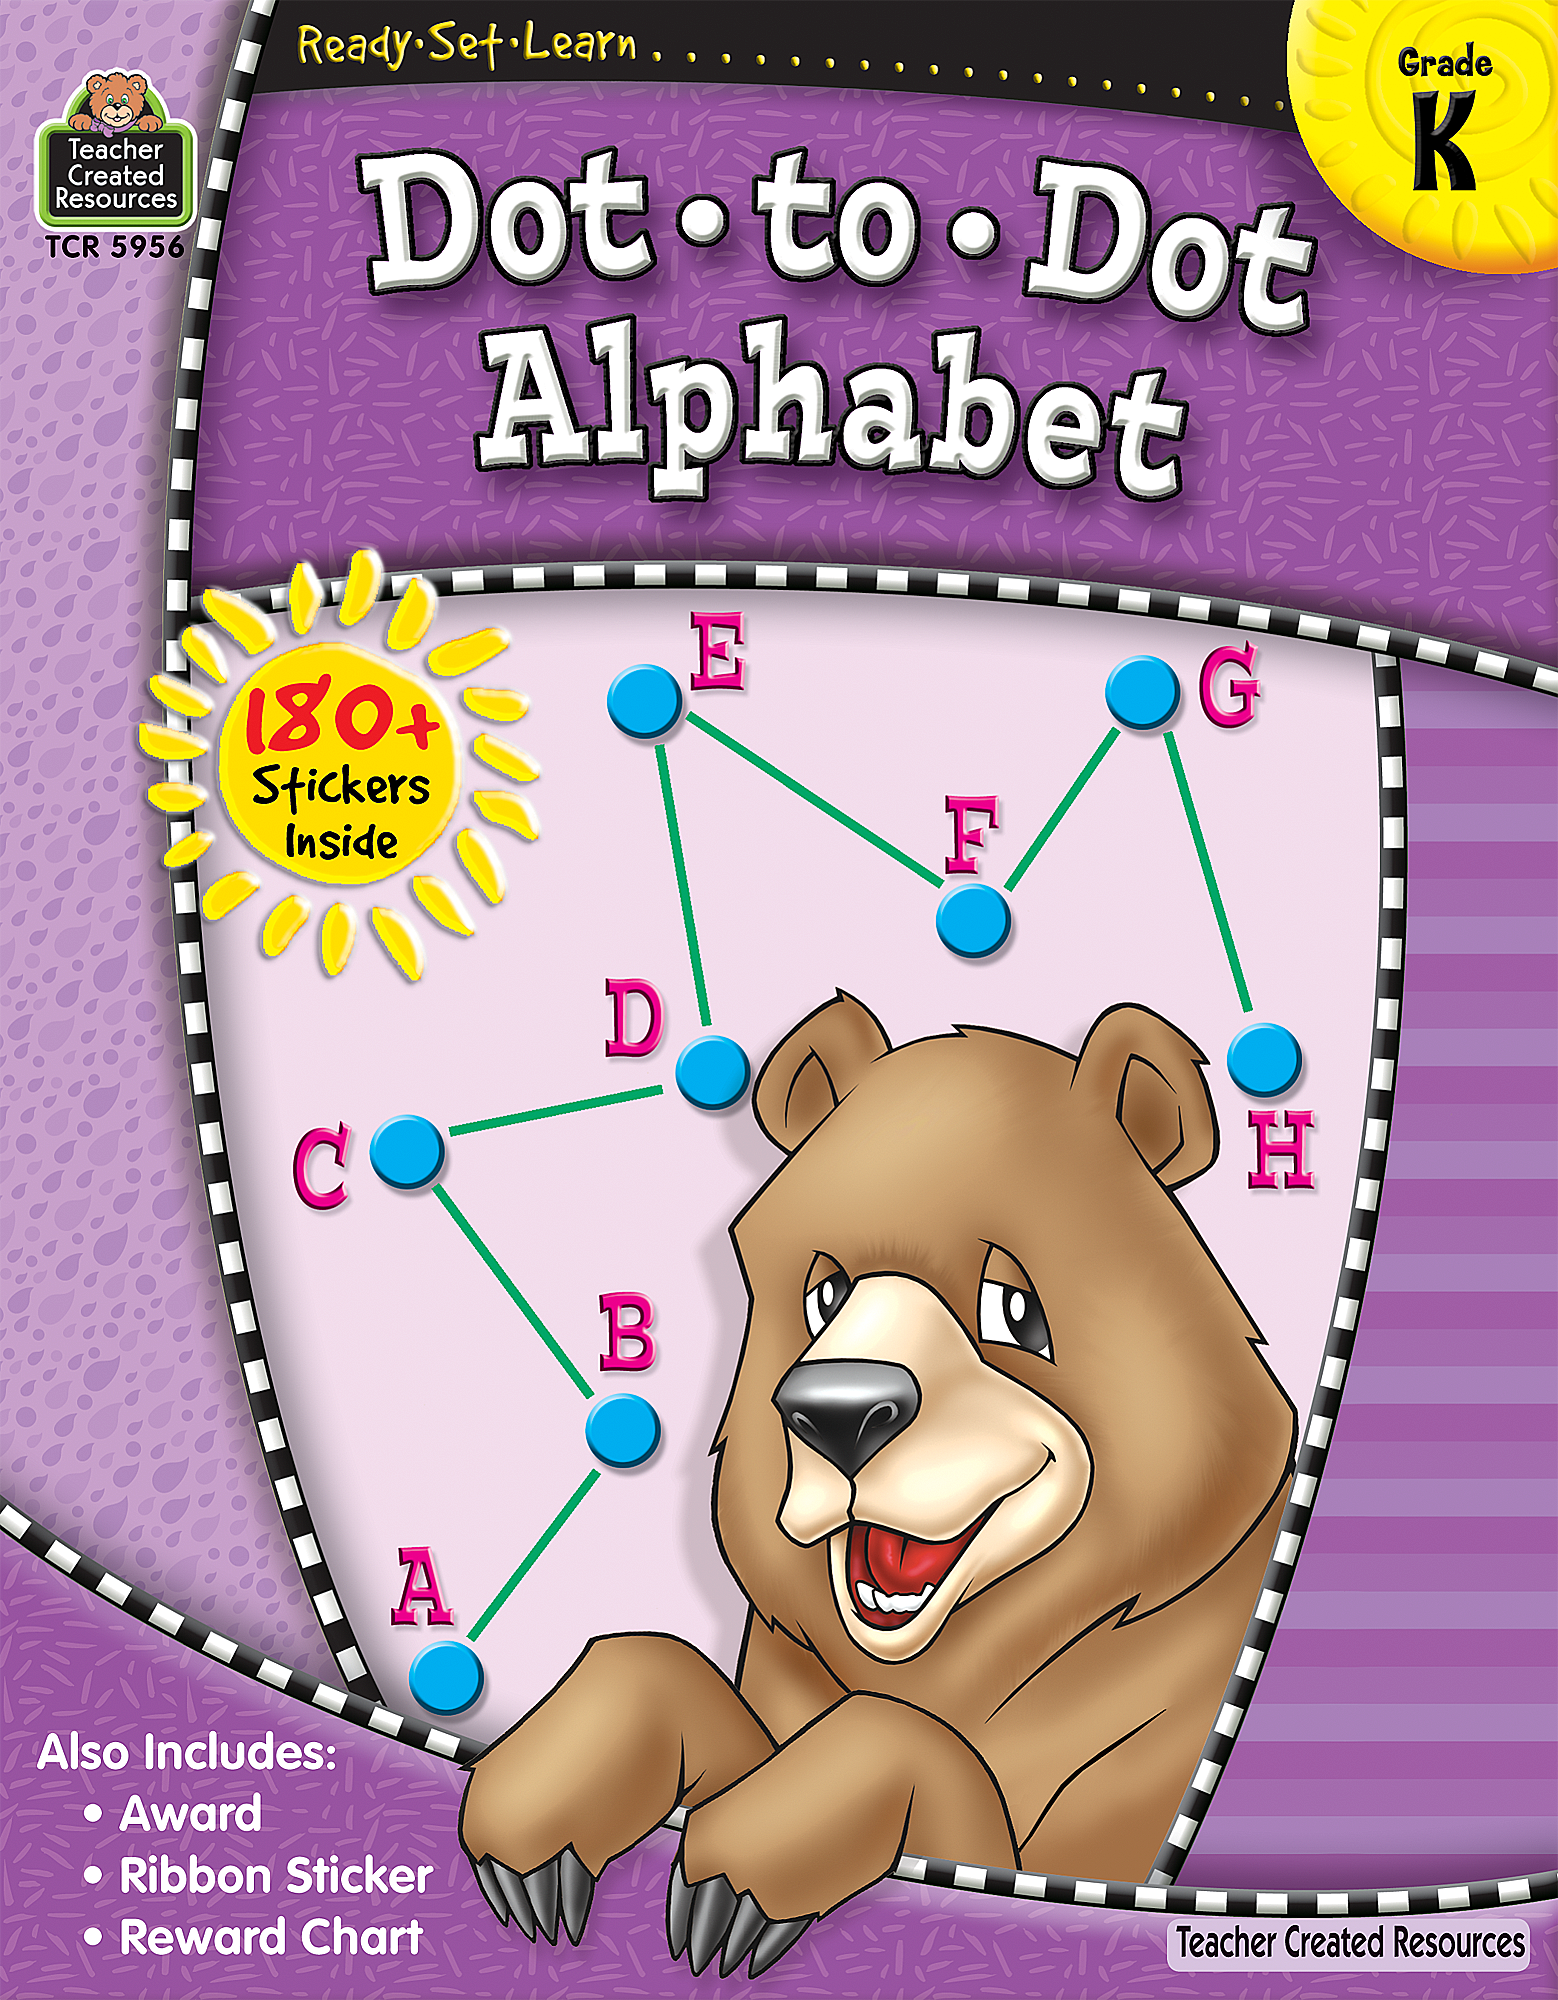 ready-set-learn-dot-to-dot-alphabet-grade-k-tcr5956-teacher